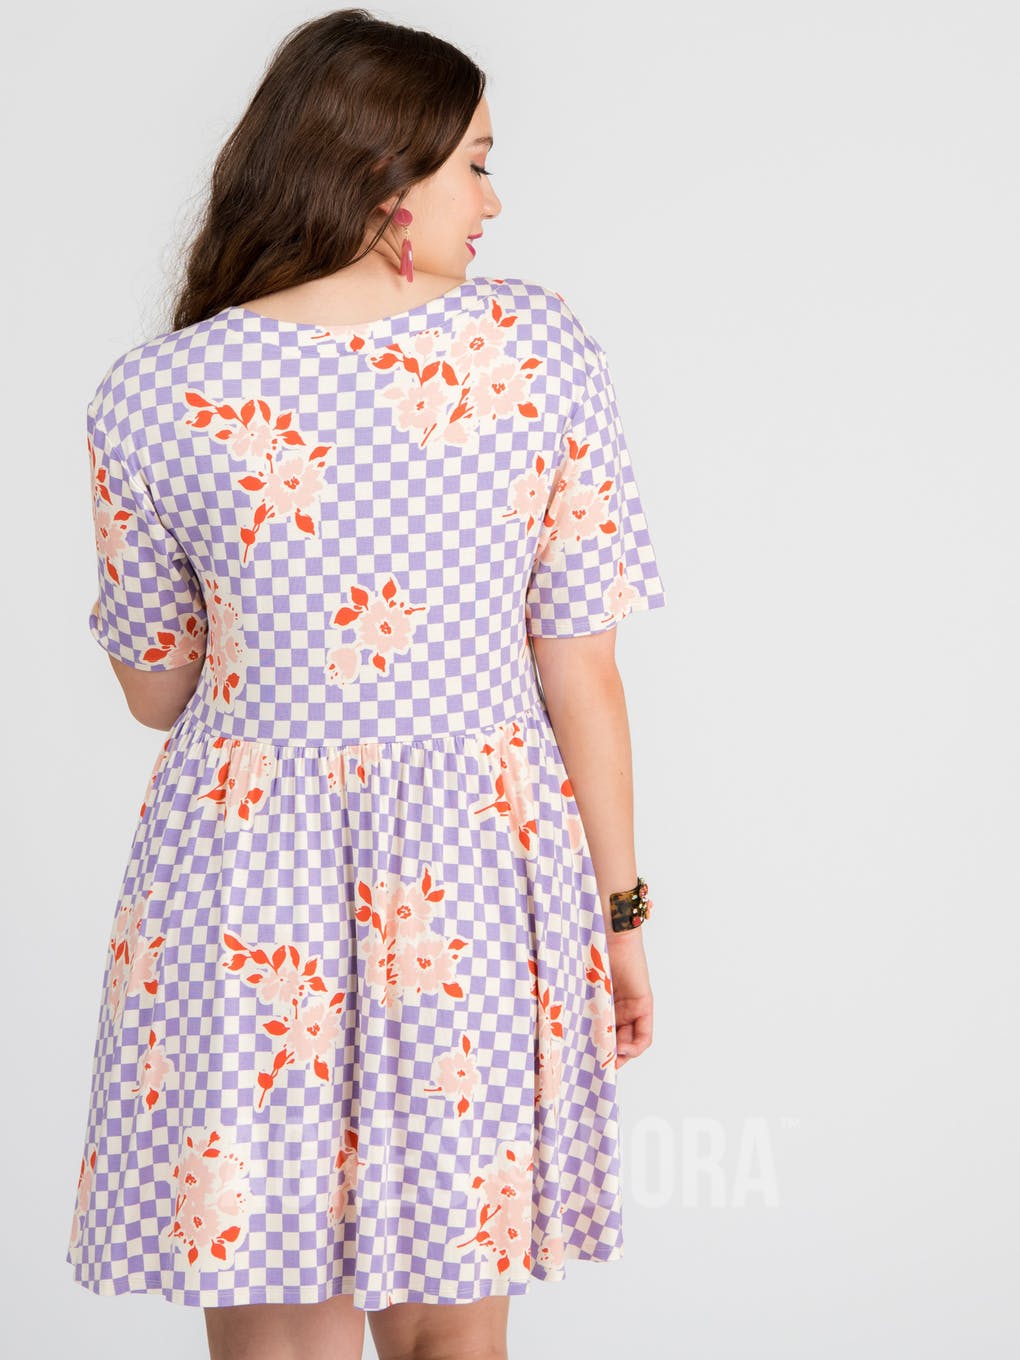 Modern Tunic Dress Checkered Floral